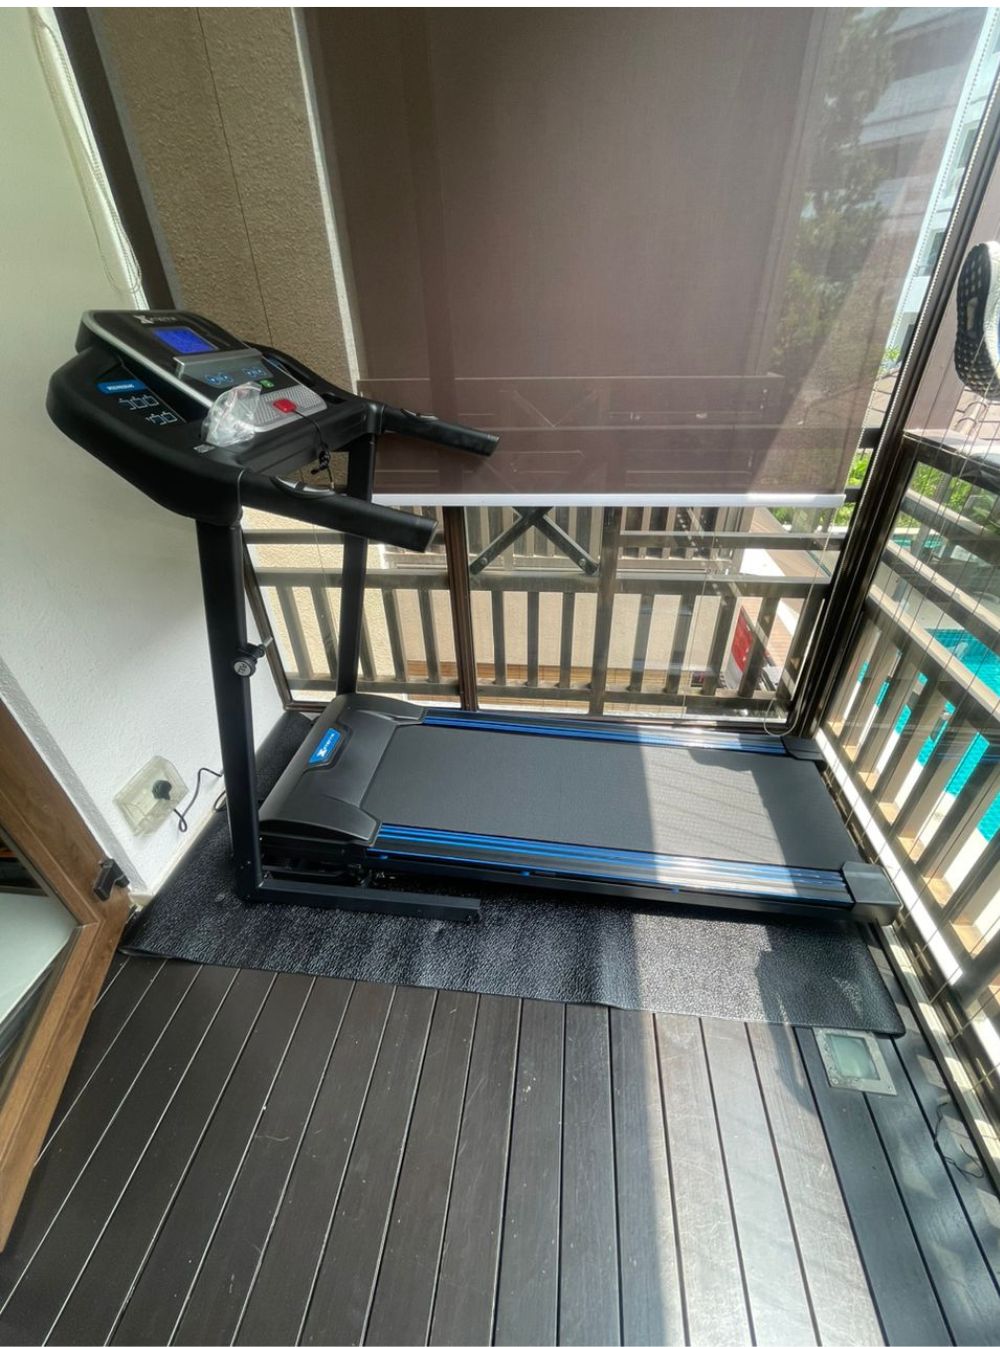 Xterra TR180 workout Treadmill